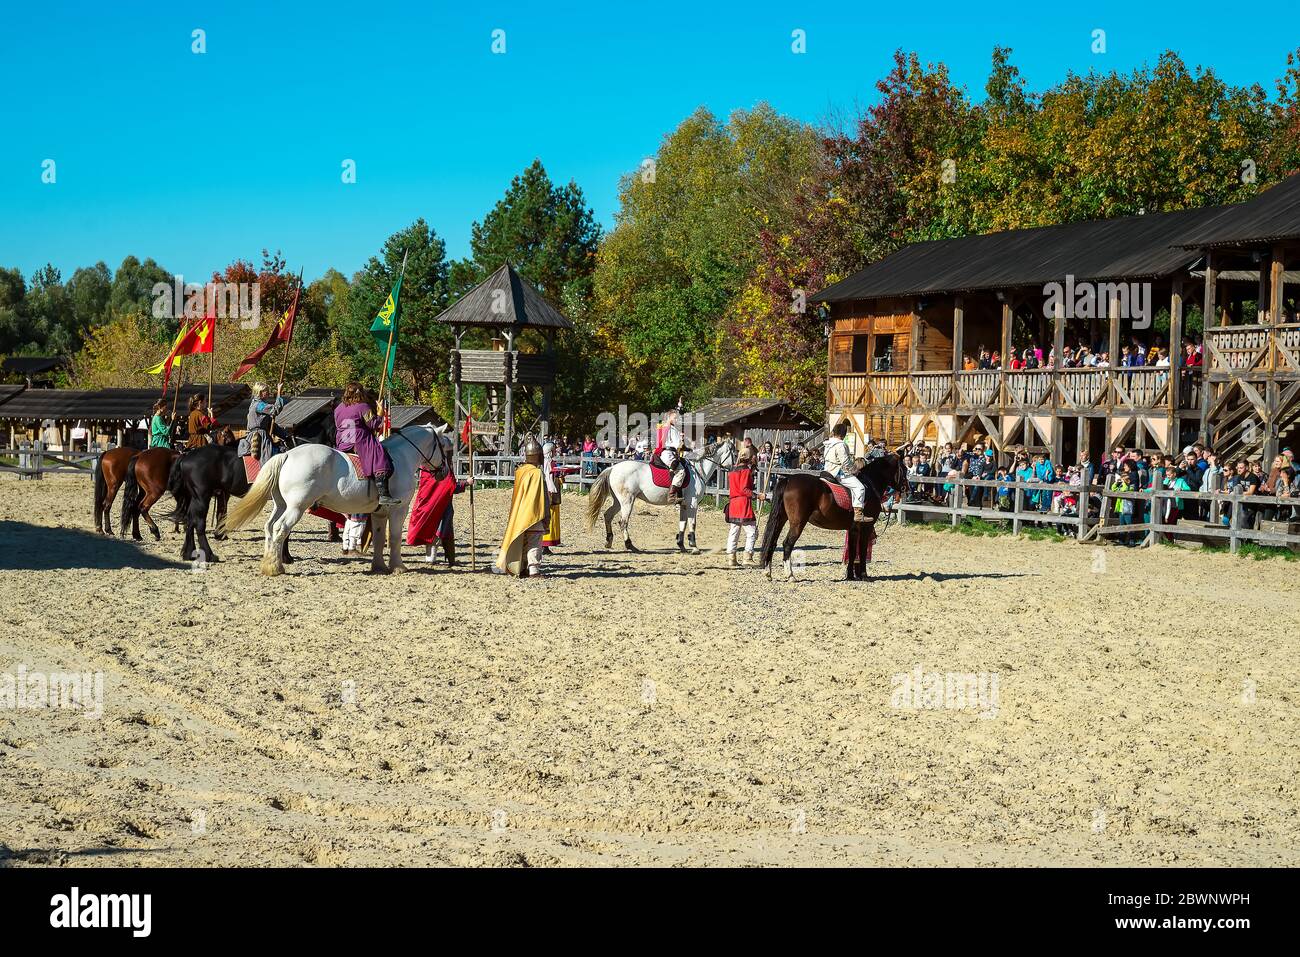 Kyiv region, UA, 13.10.2018. Crowd of people at the festival. Costume Recreation Park Kyivan Rus of medieval period Kyiv Rus. Stock Photo